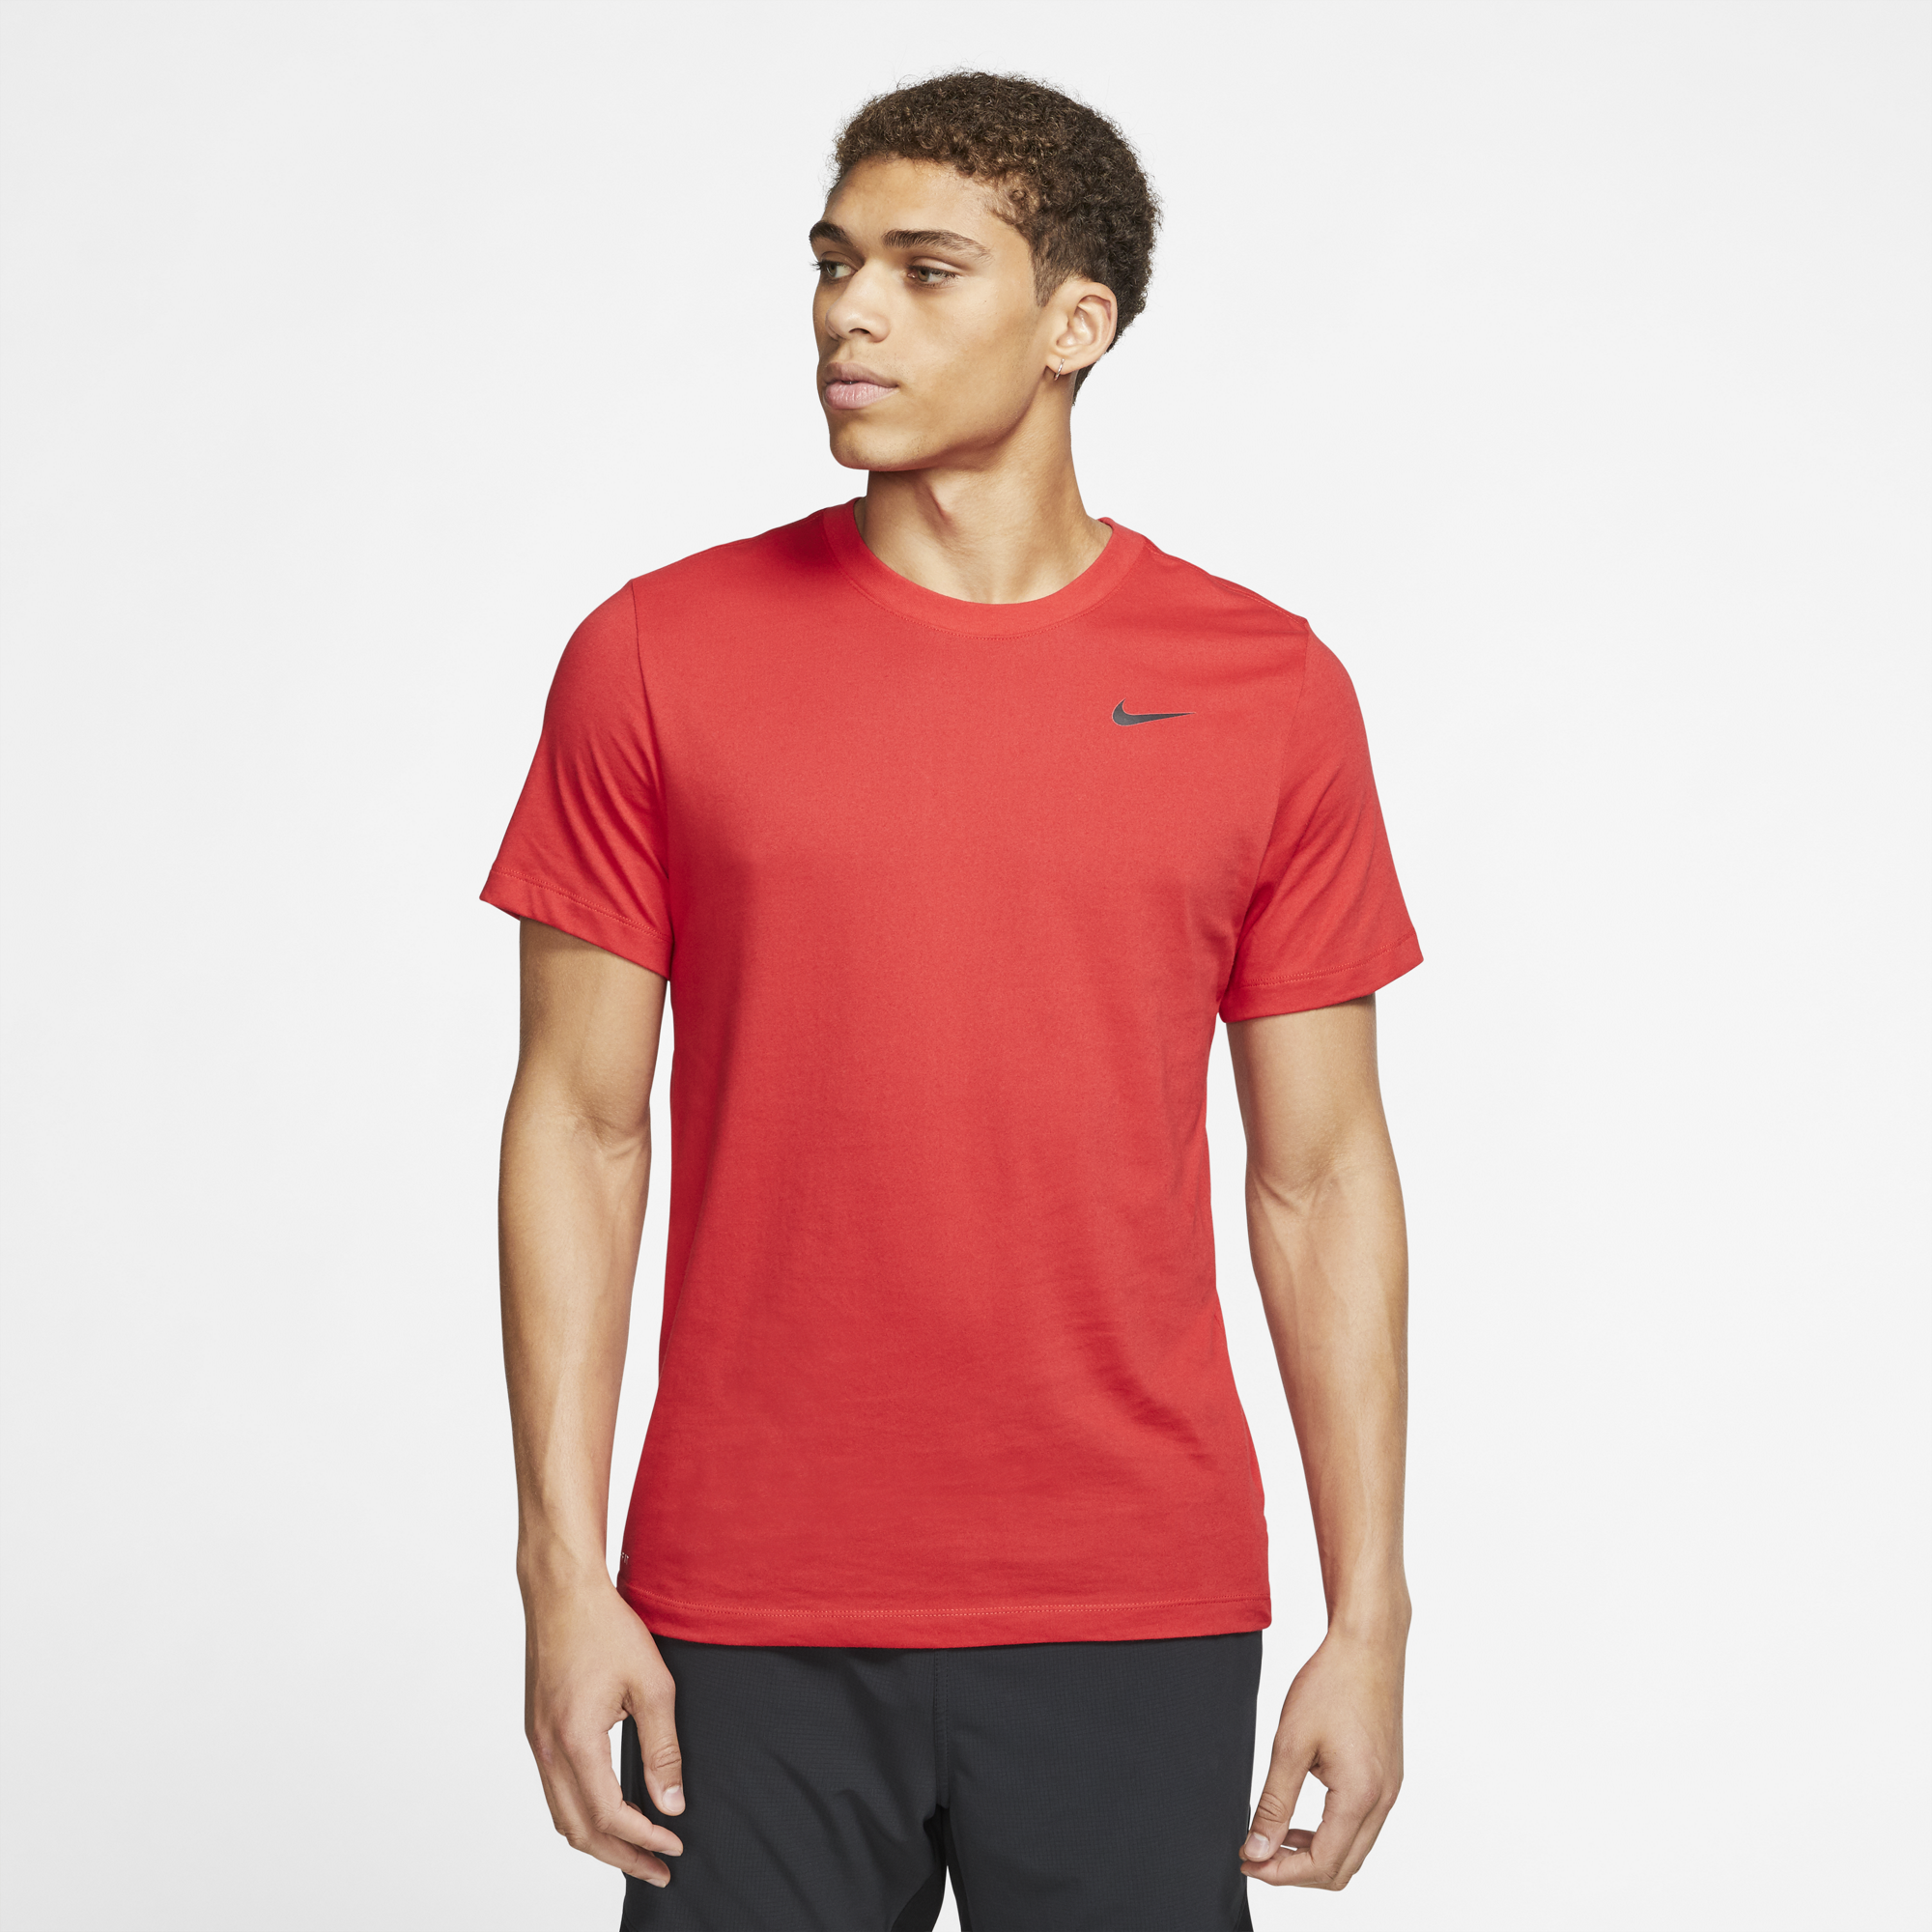 Nike Dry Crew T-Shirt - Men's